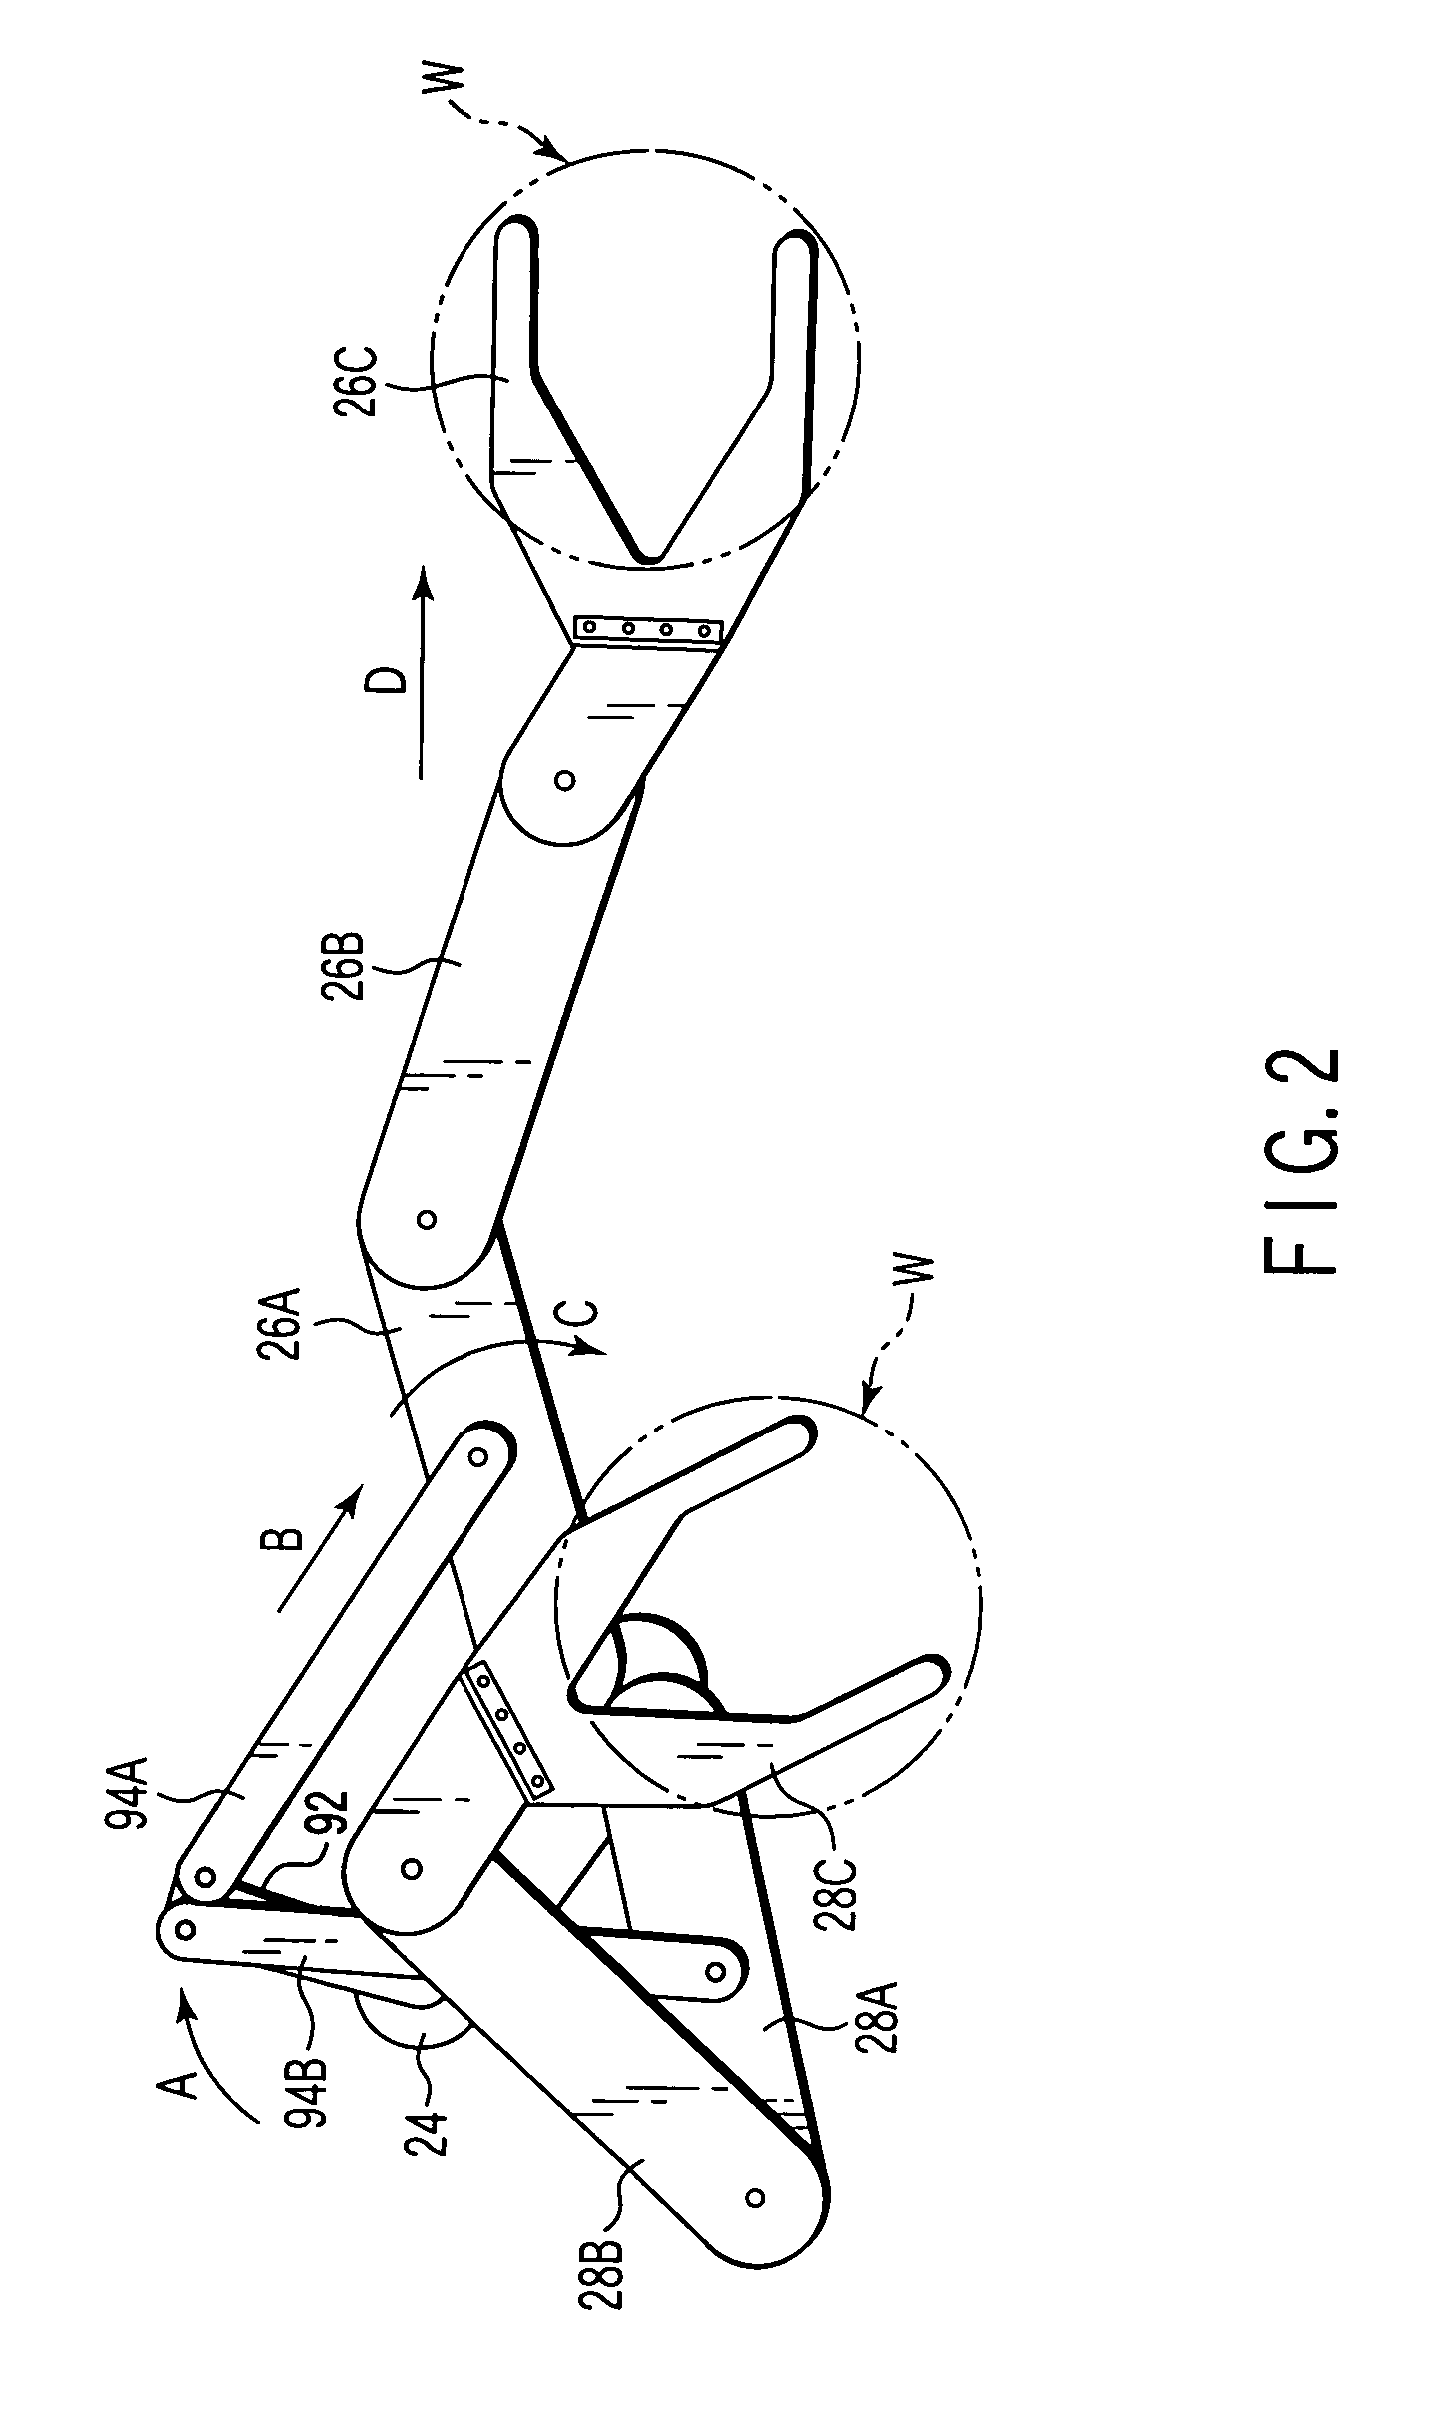 Transportation apparatus and drive mechanism